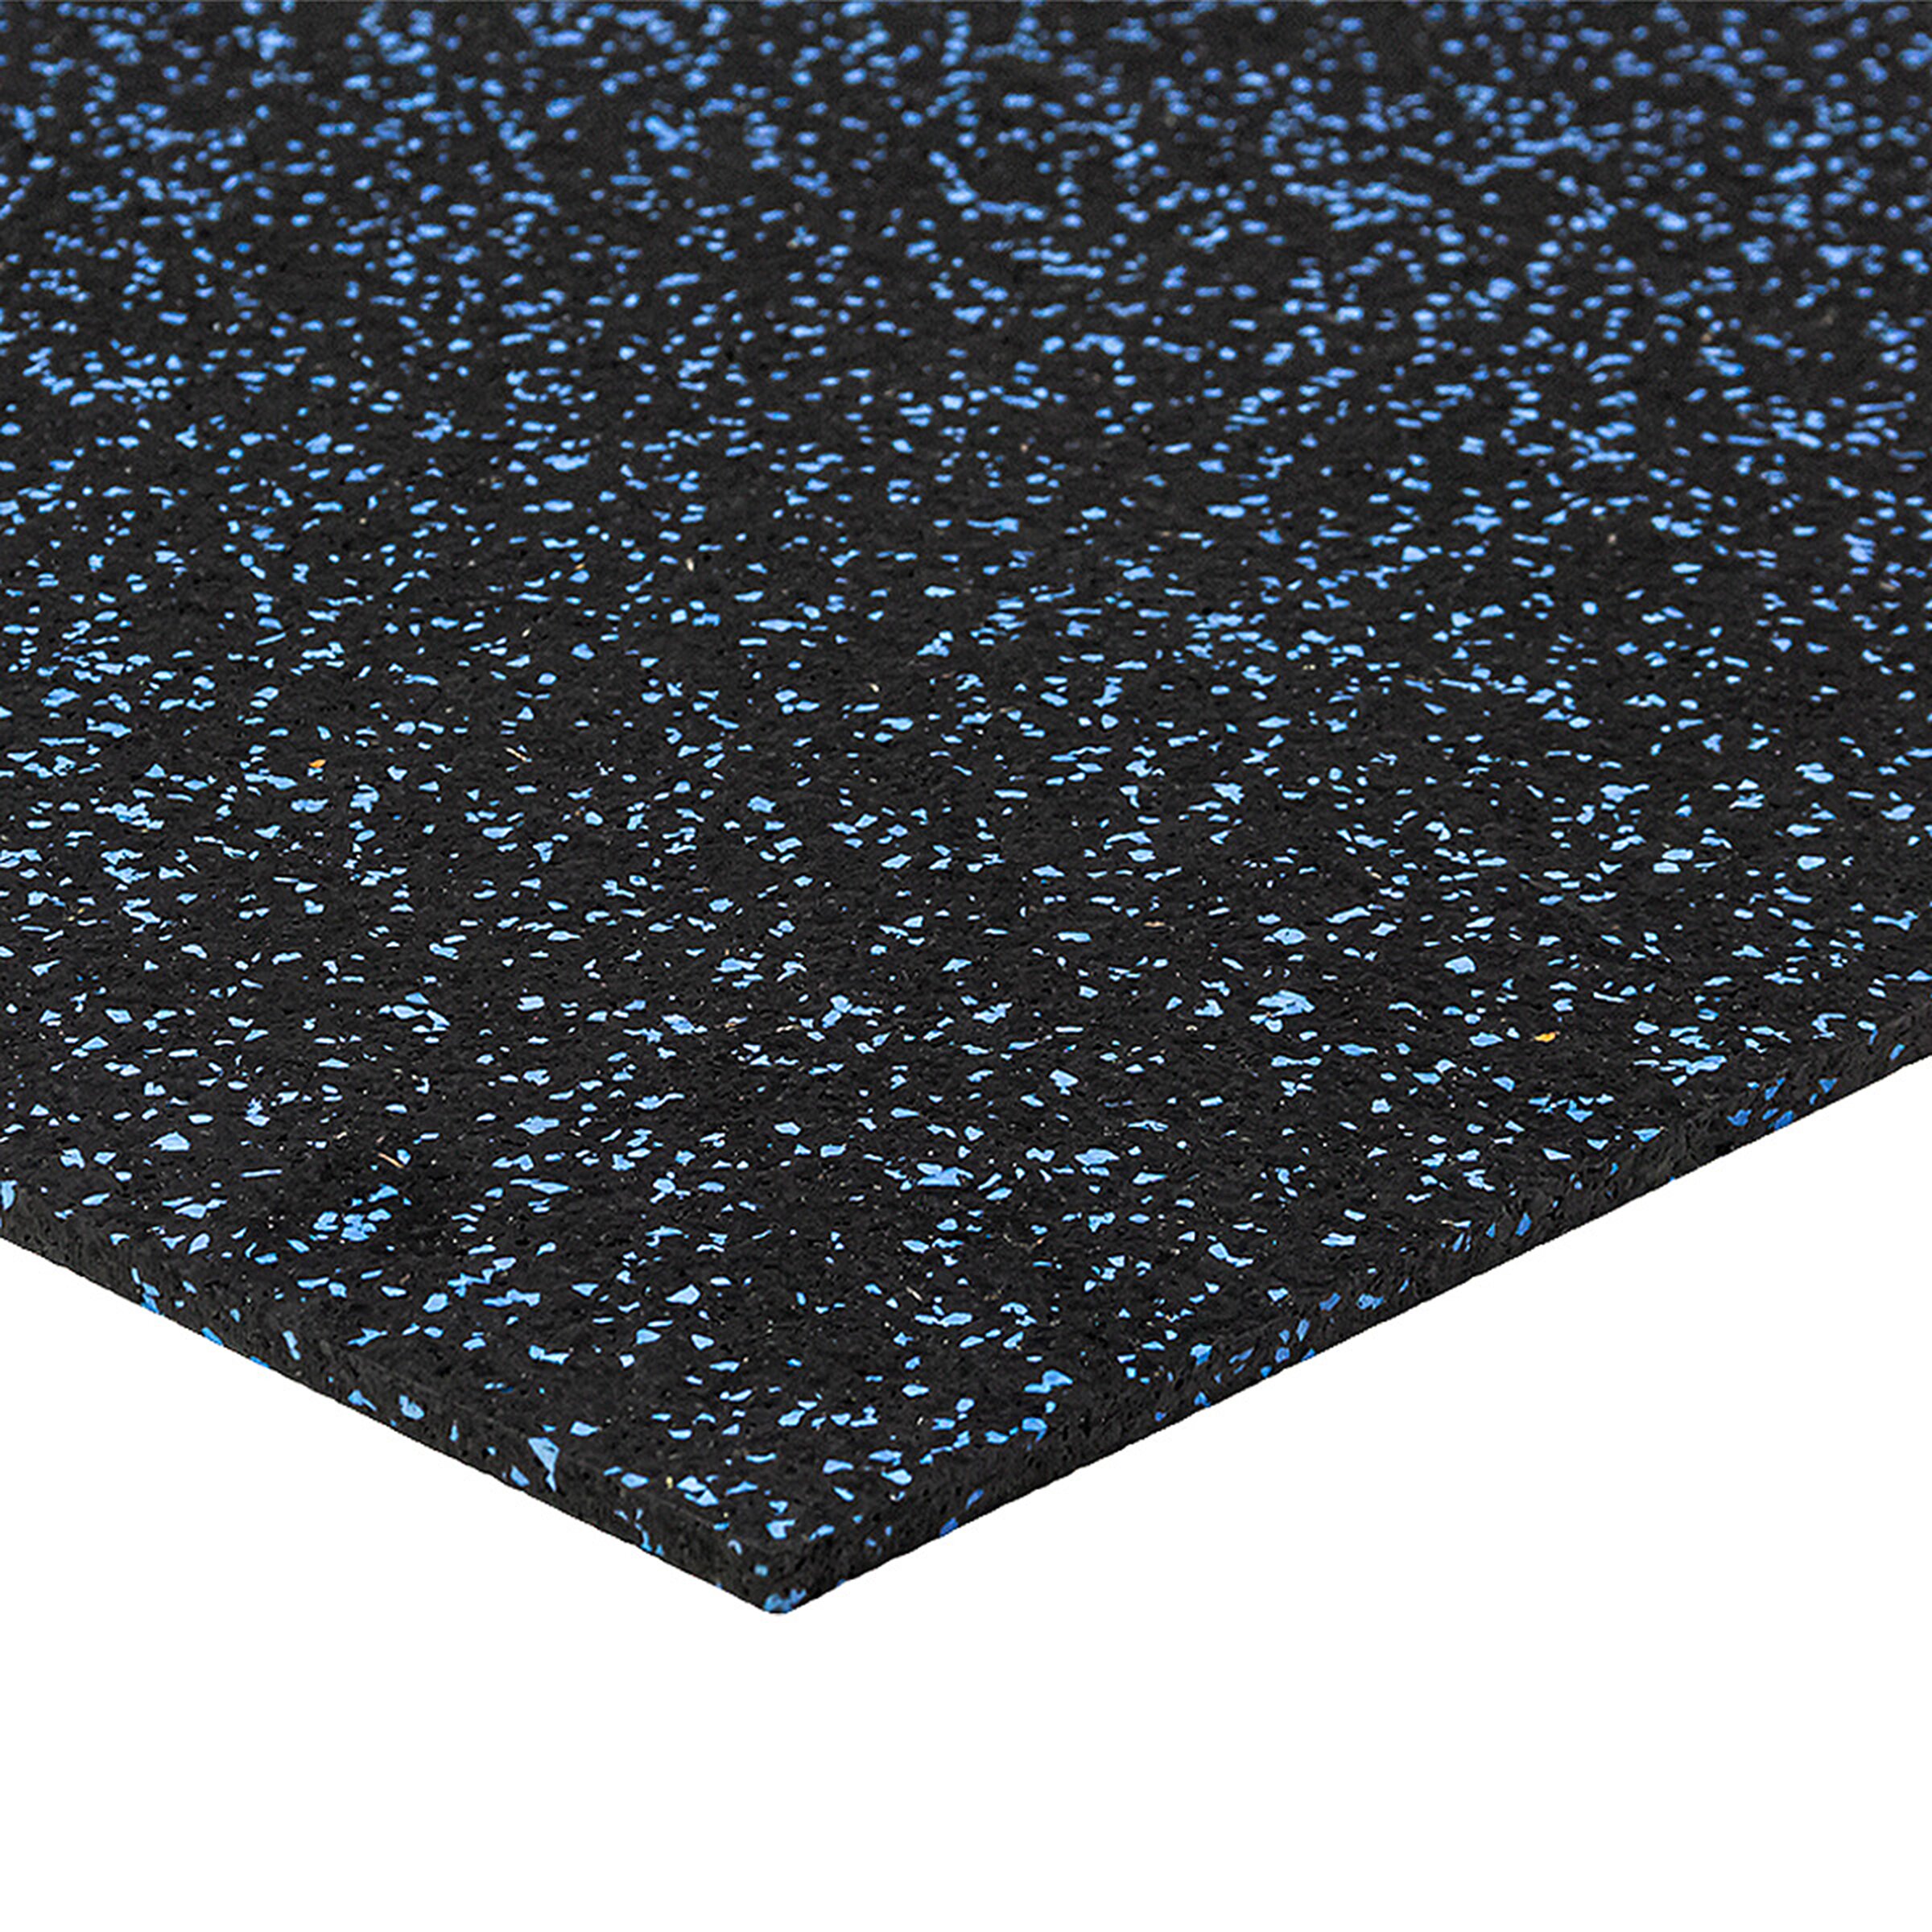 Černo-modrá podlahová guma (puzzle - střed) FLOMA FitFlo SF1050 - délka 50 cm, šířka 50 cm, výška 1 cm